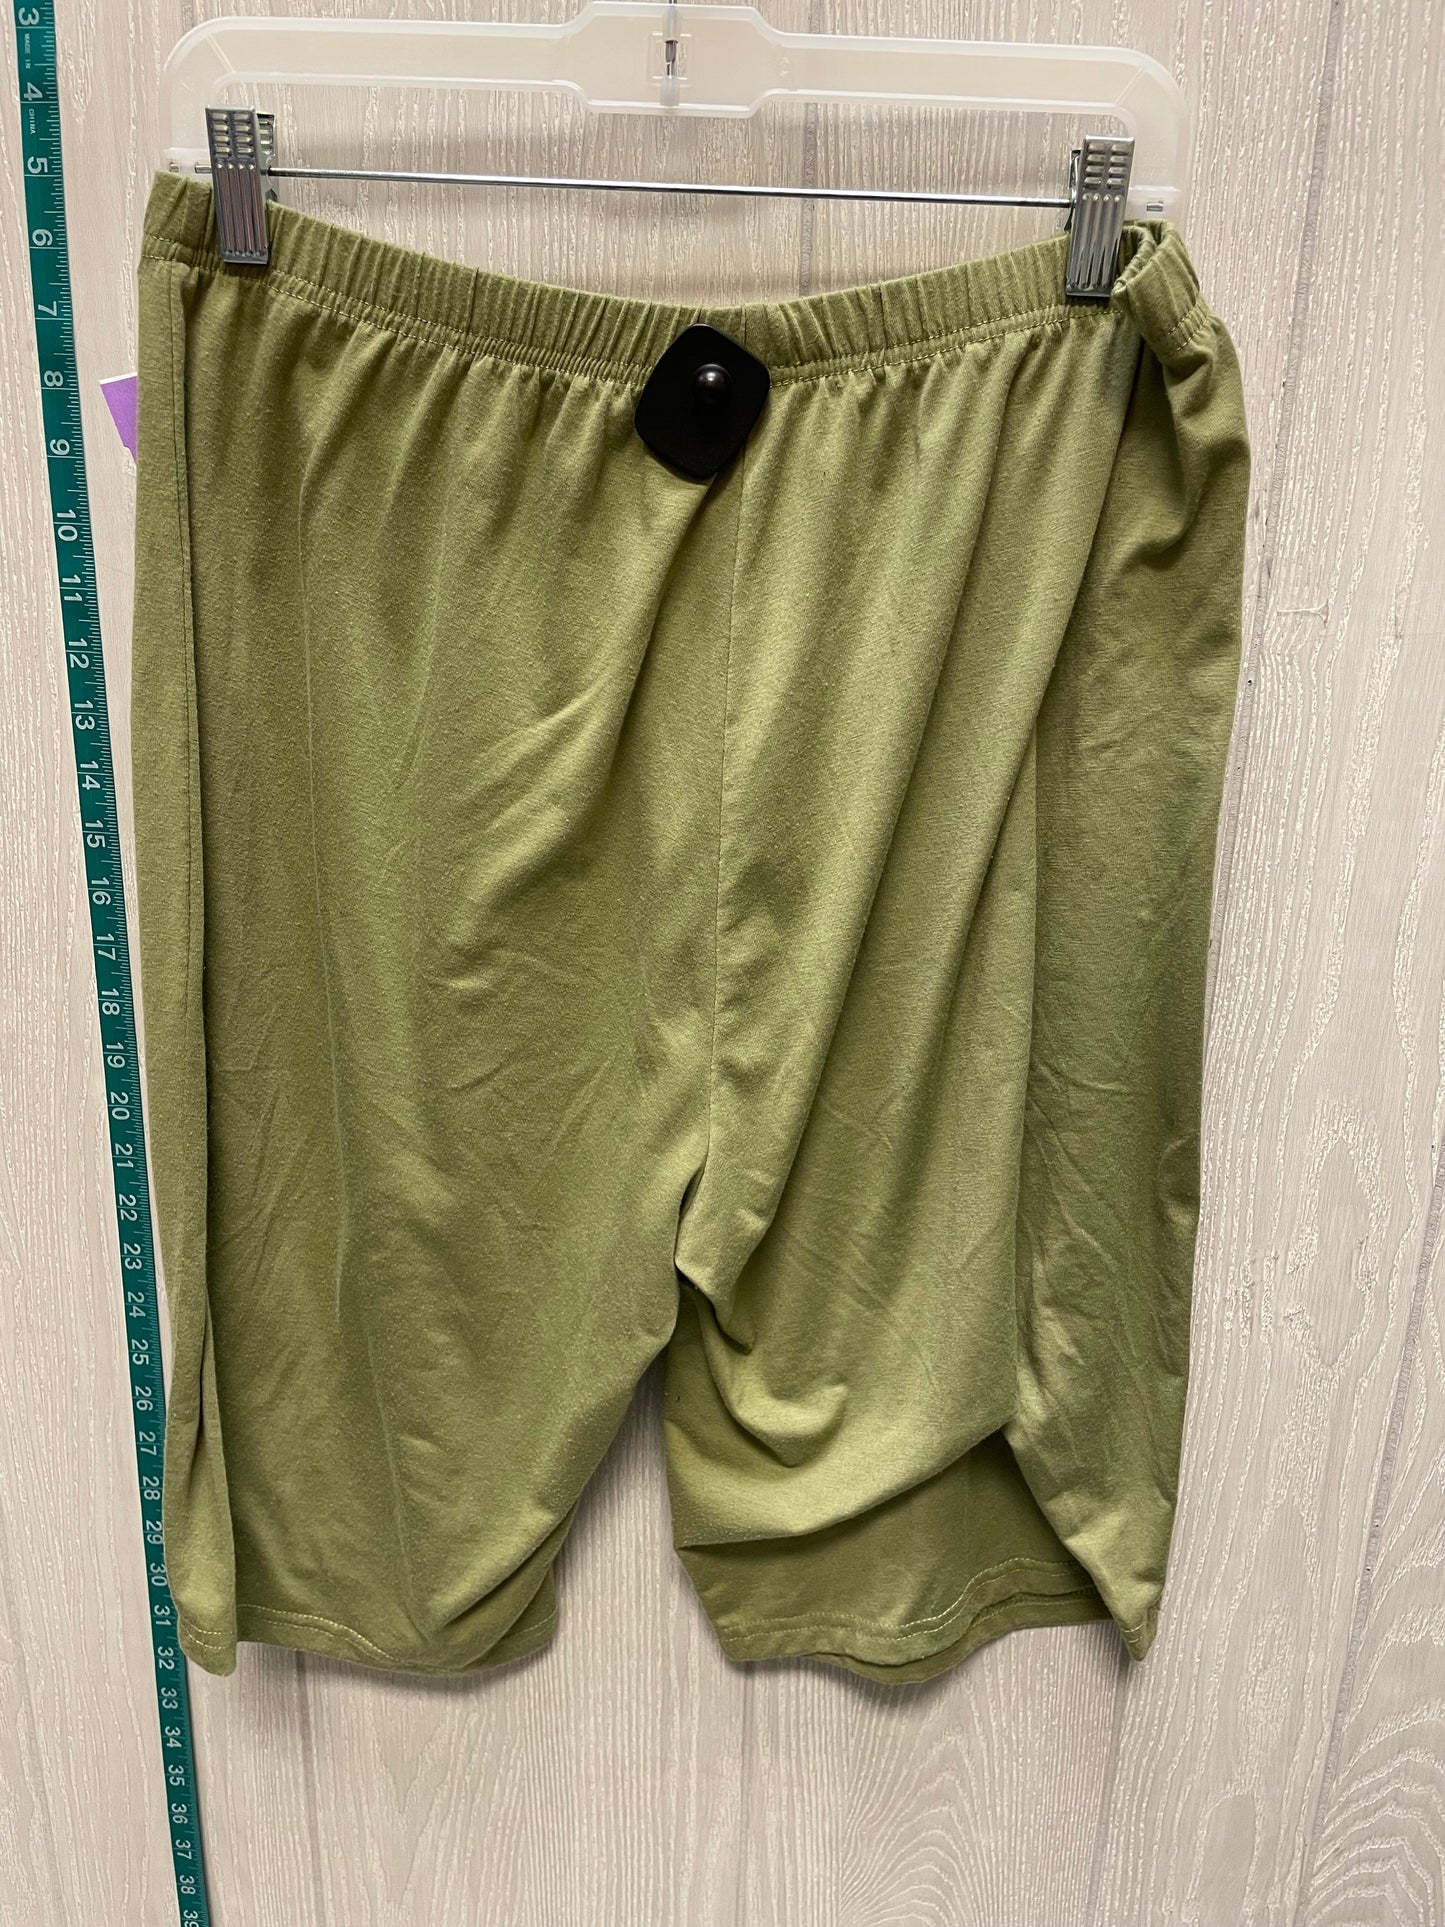 Green Shorts Clothes Mentor, Size 24